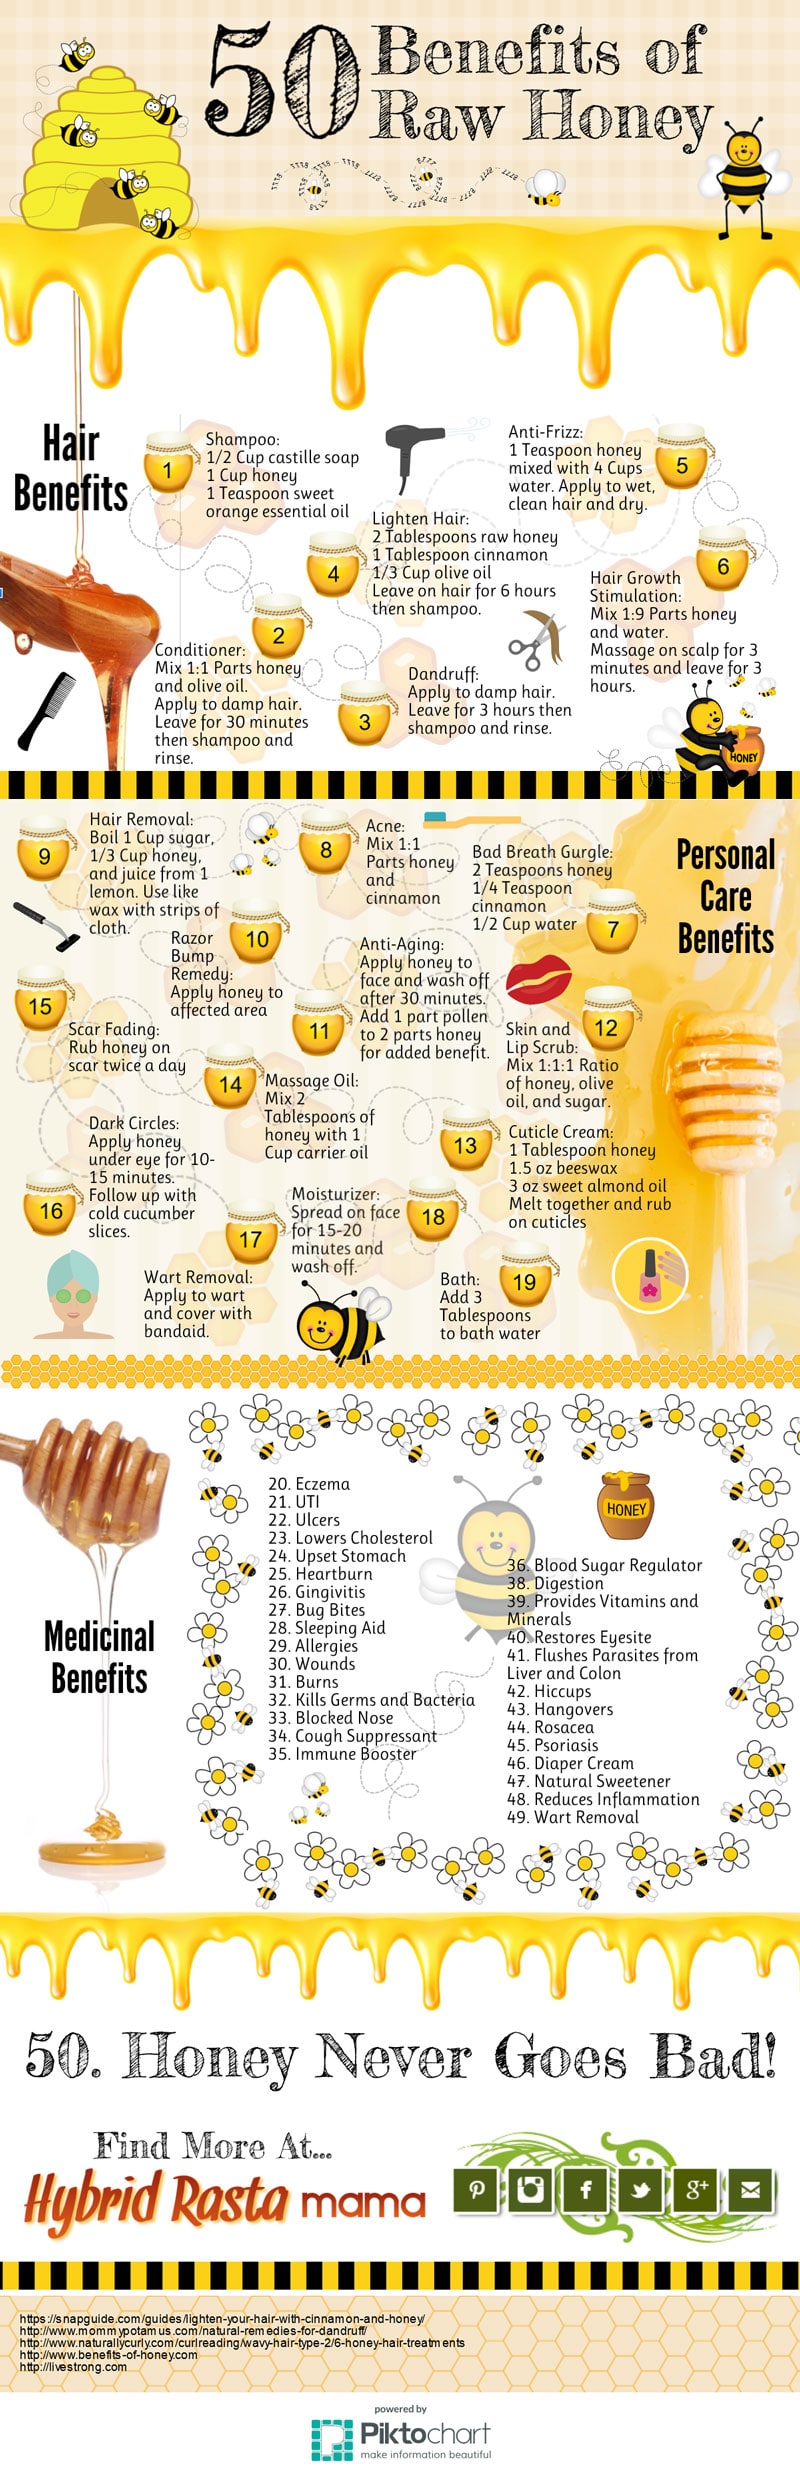 50 Benefits of Raw Honey infographic